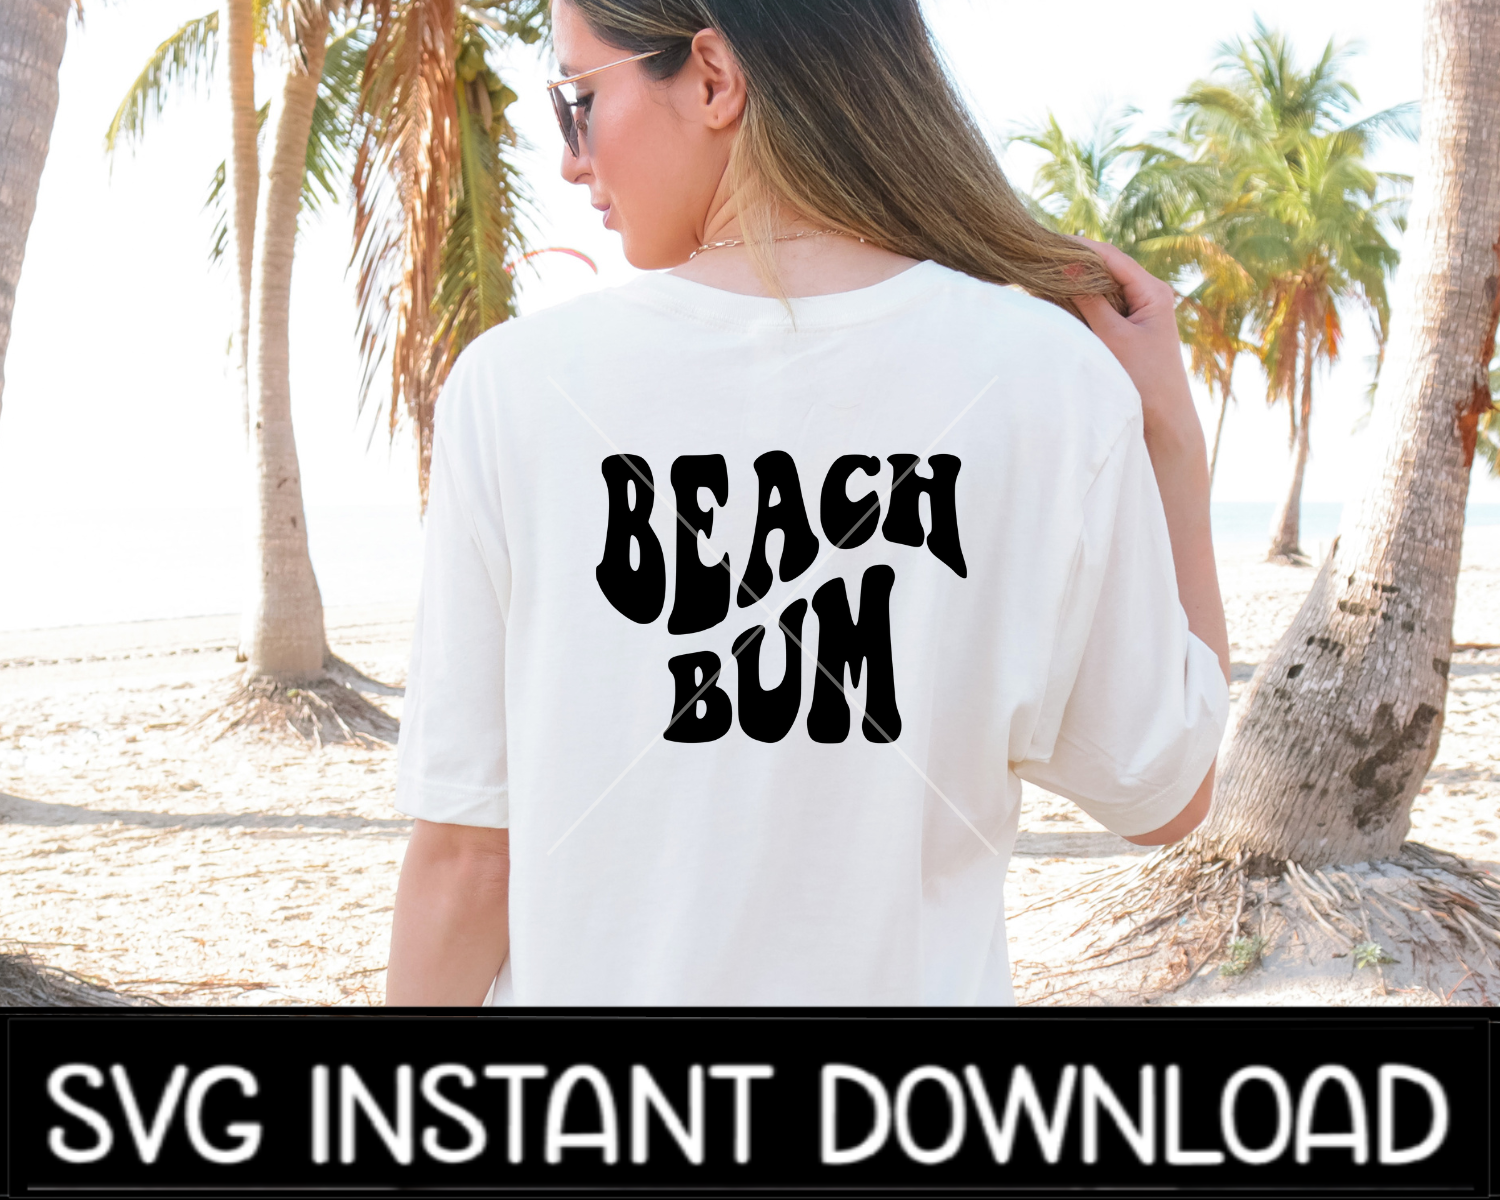 Beach Bum SVG, Summer SVG, Beach Bum Wavy Letters SvG Files Instant Download, Cricut Cut Files, Silhouette Cut Files, Download, Print